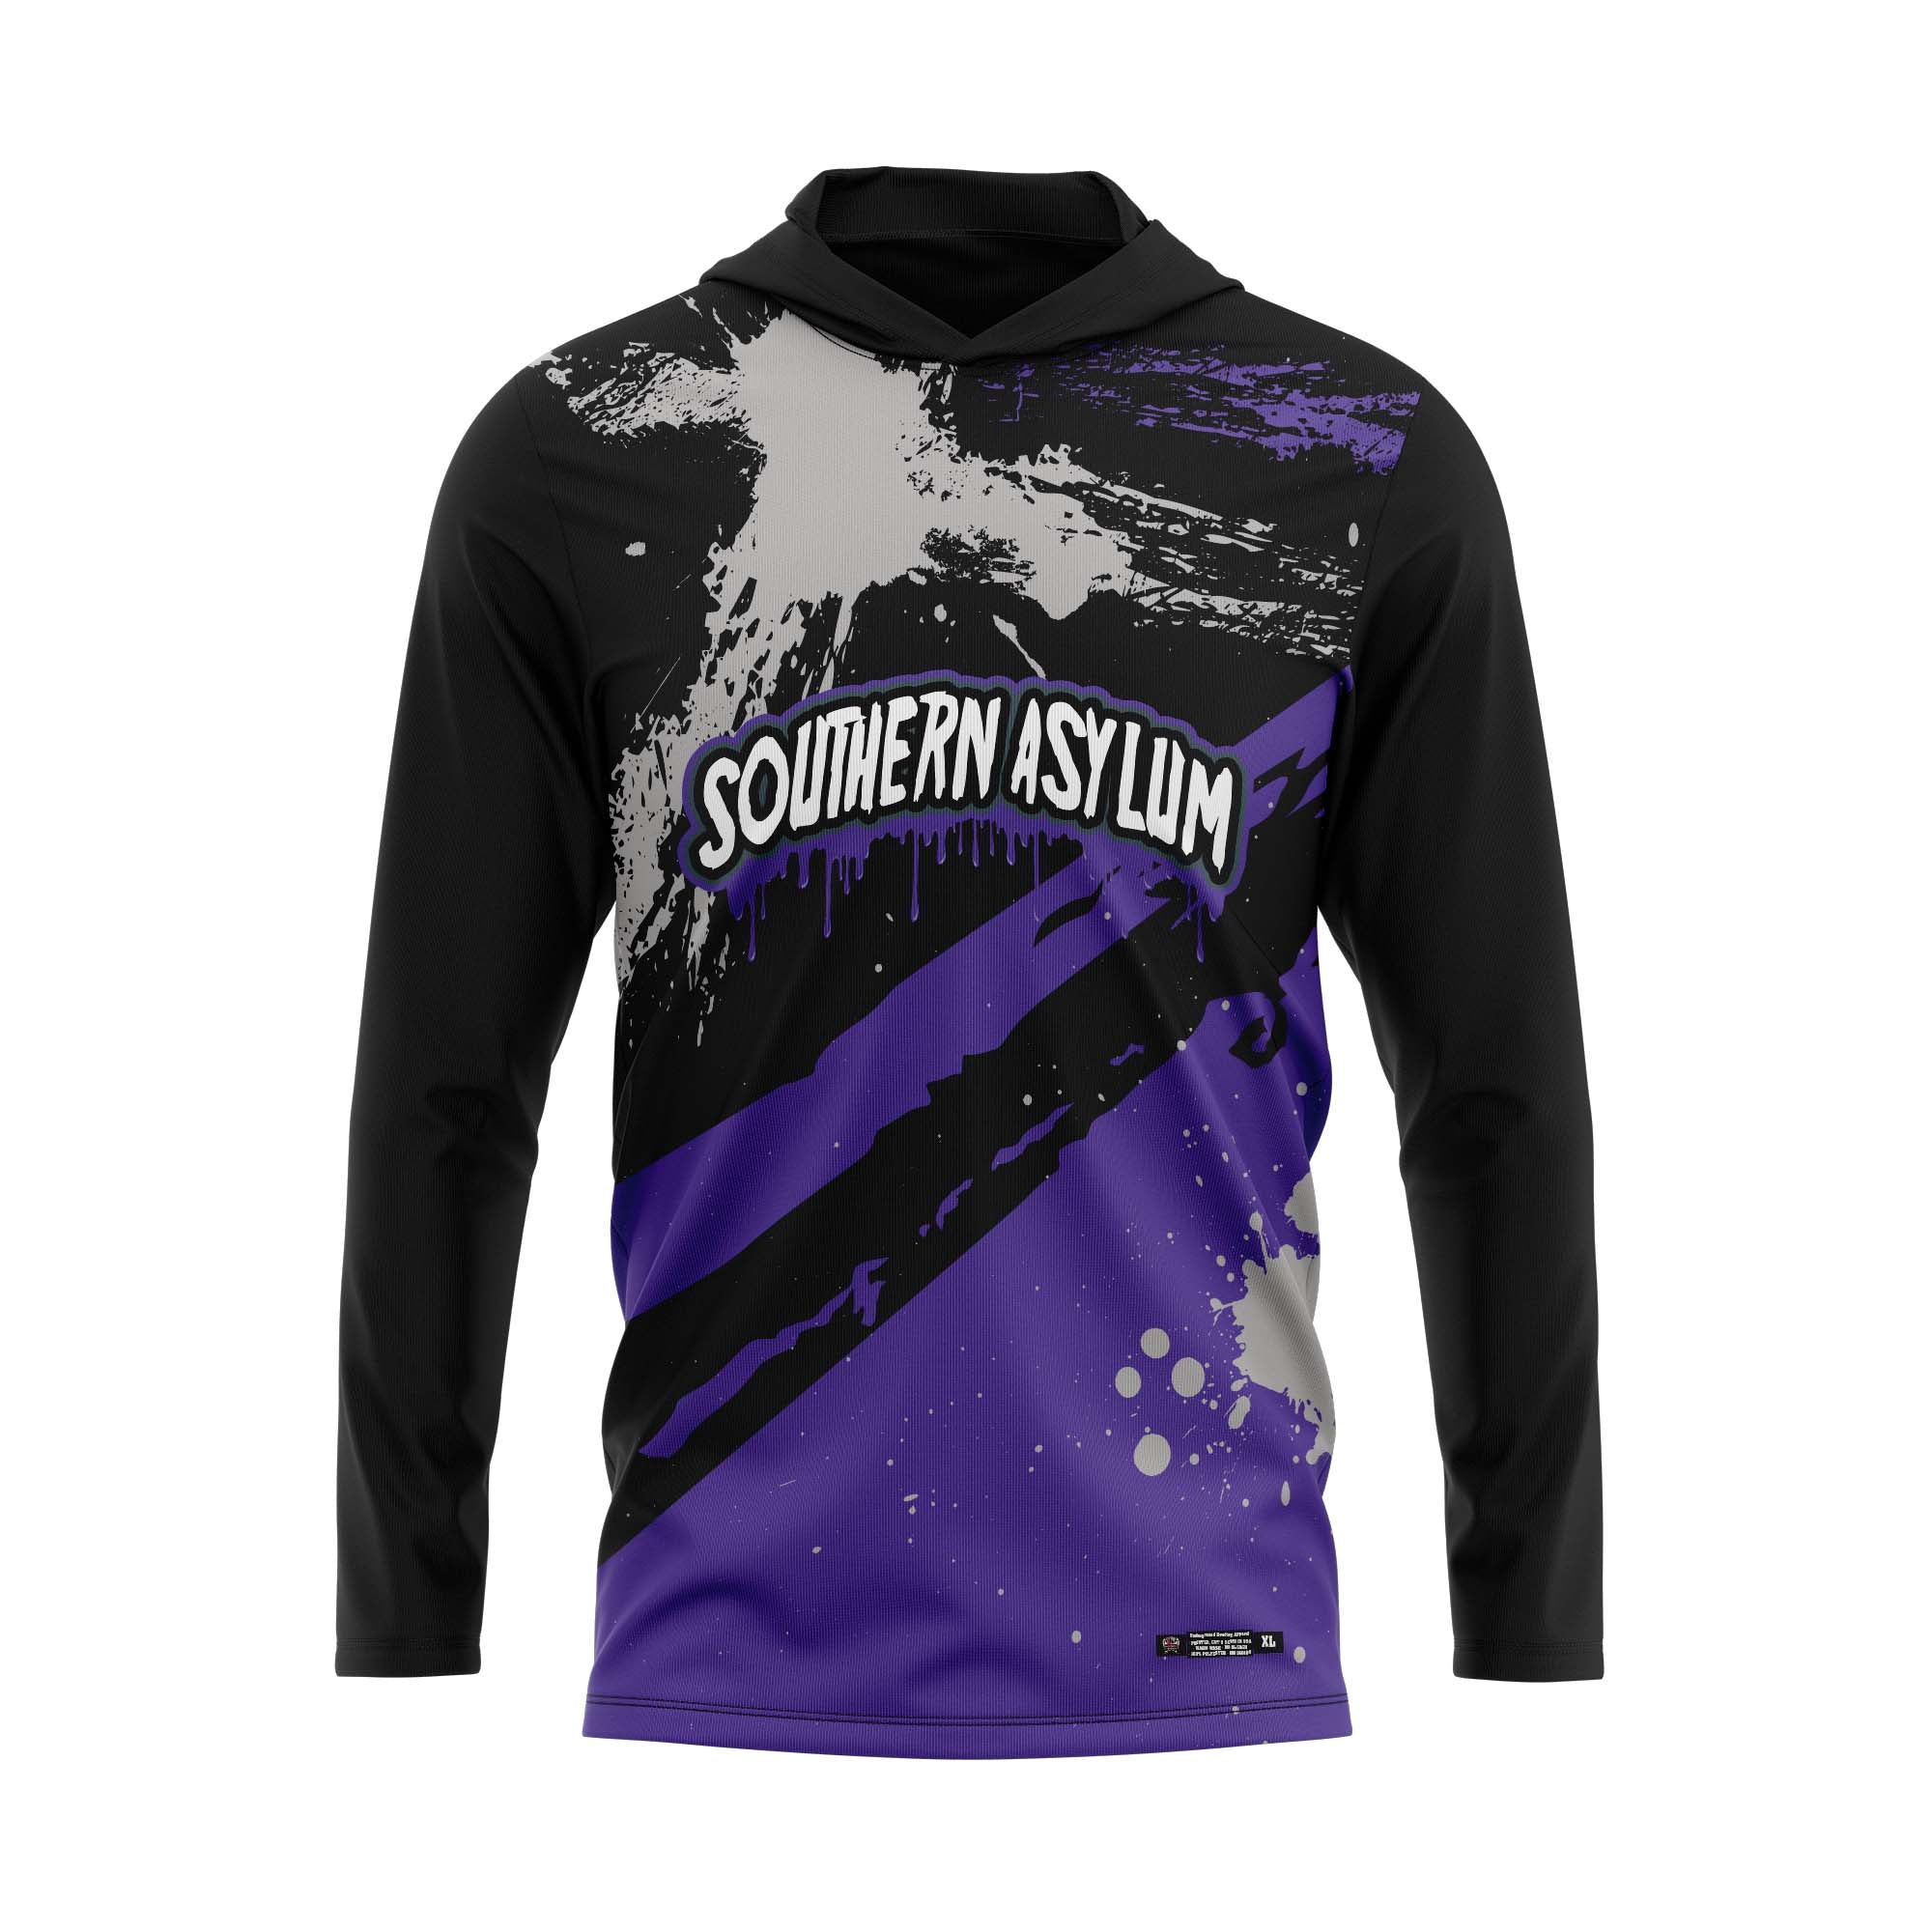 Southern Asylum Gray / Purple Splatter Jersey